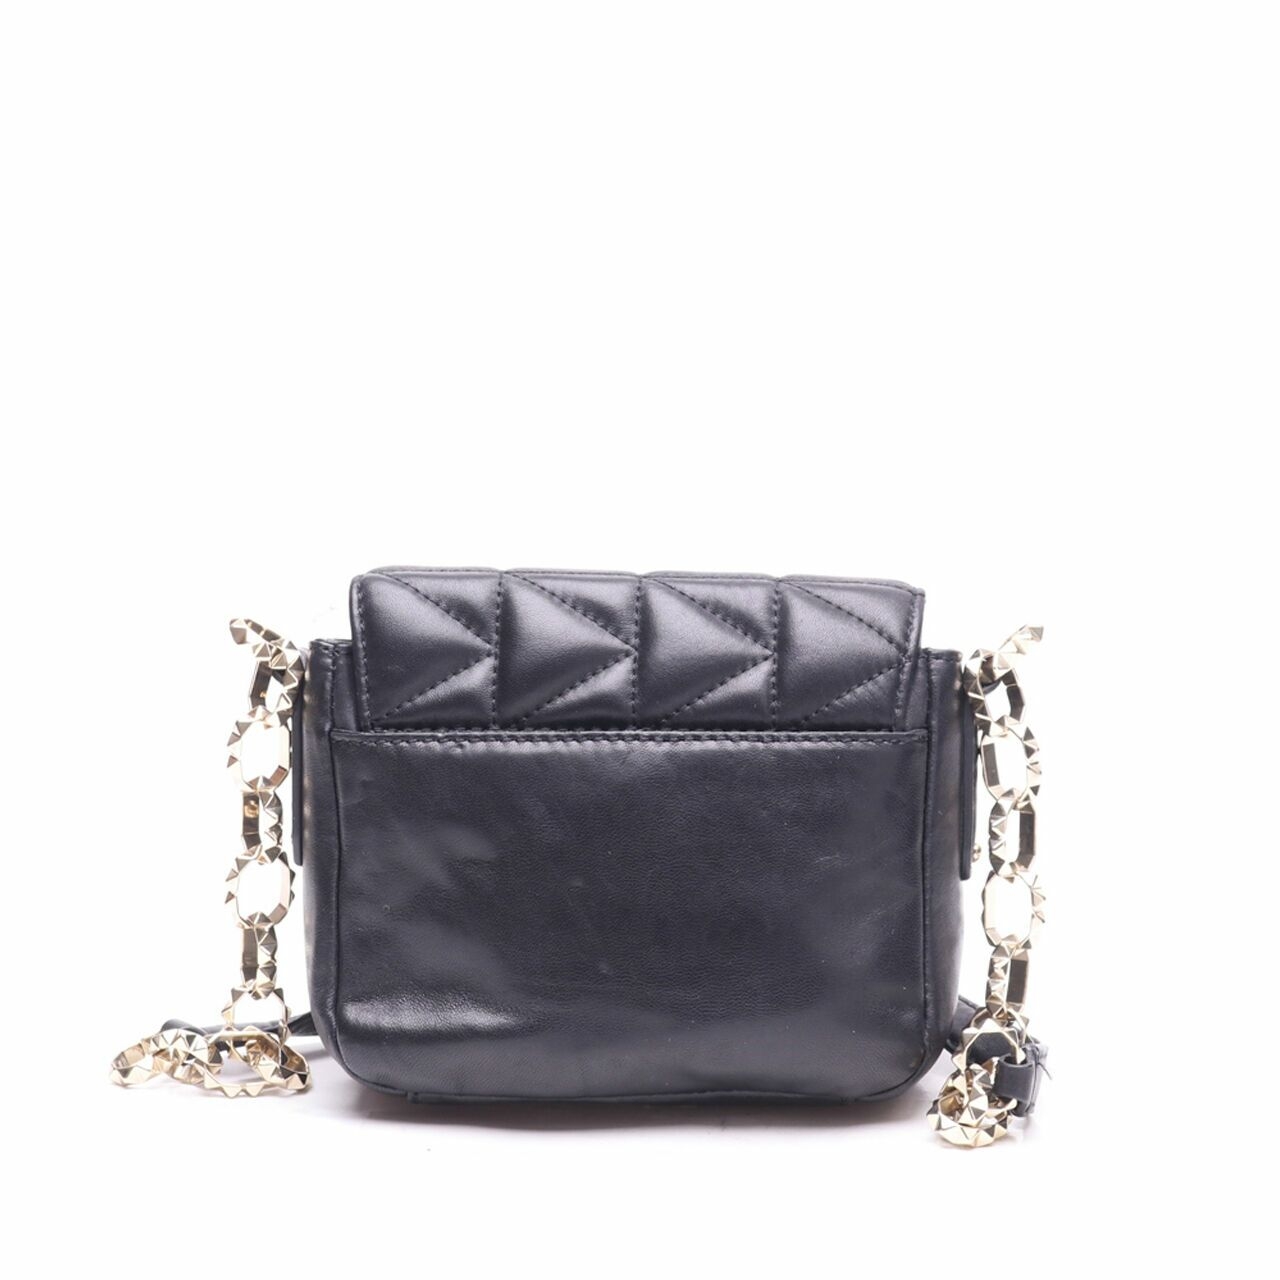 Karl Lagerfeld Black Leather Sling Bag